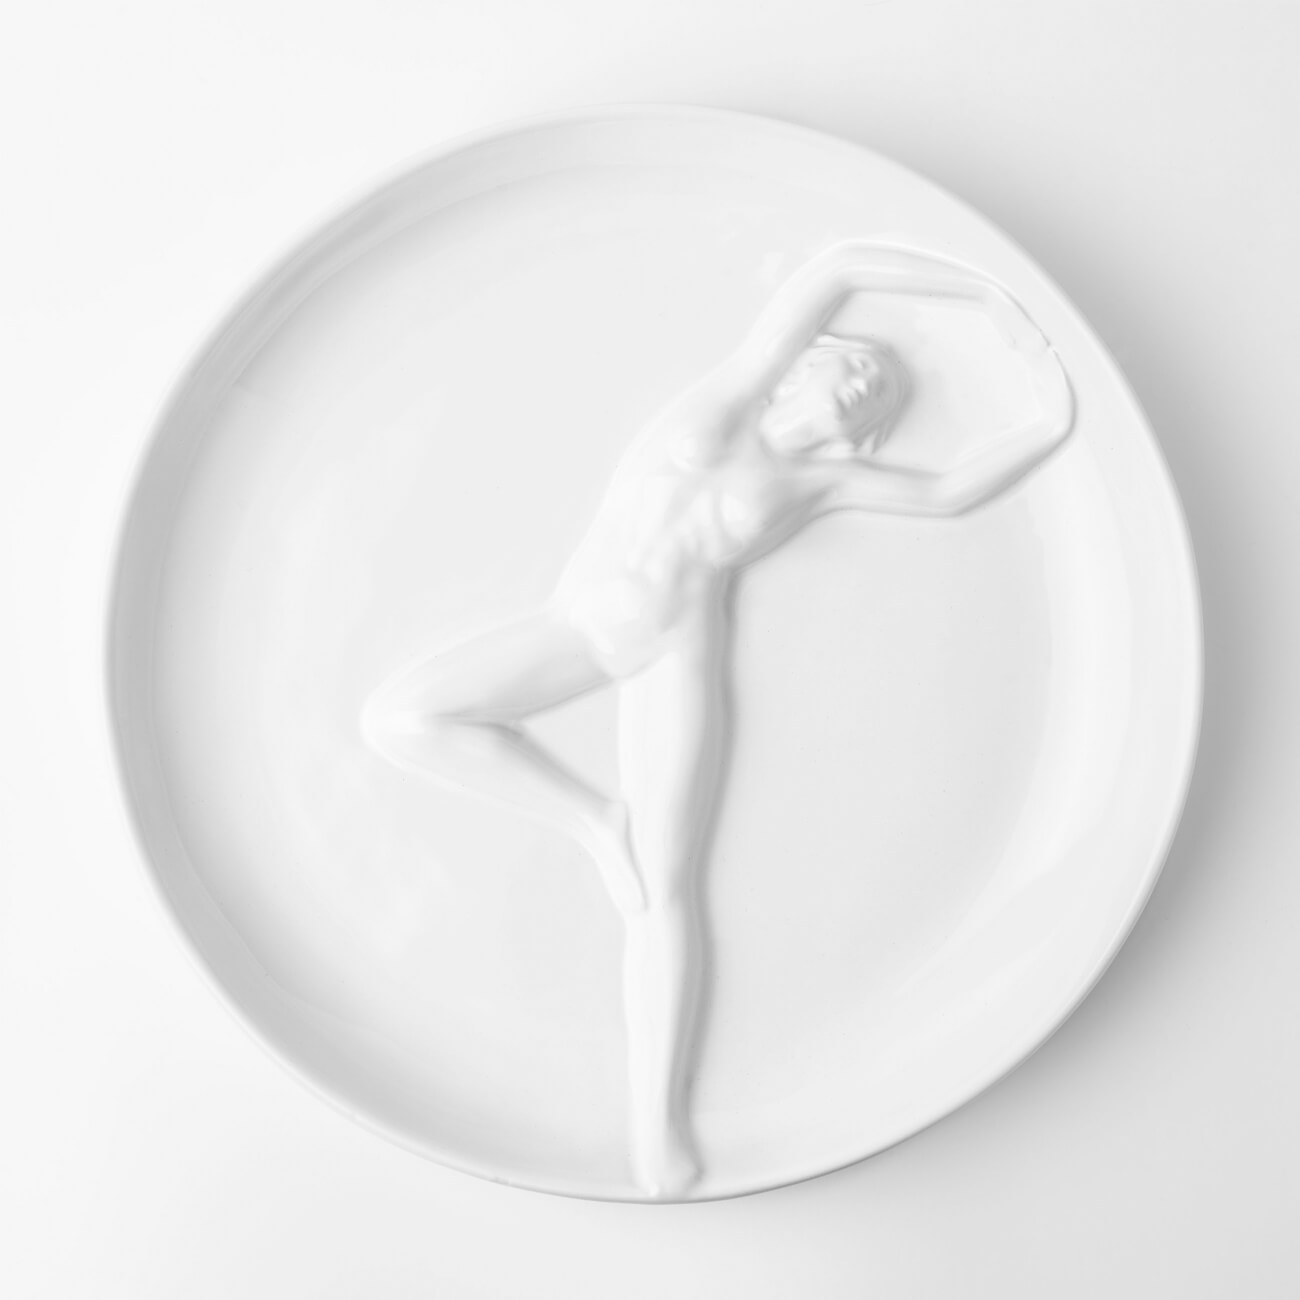 Блюдо, 24 см, керамика, белое, Женщина, Face блюдо керамика фигурное 14х20х2 см белое лист y4 3731